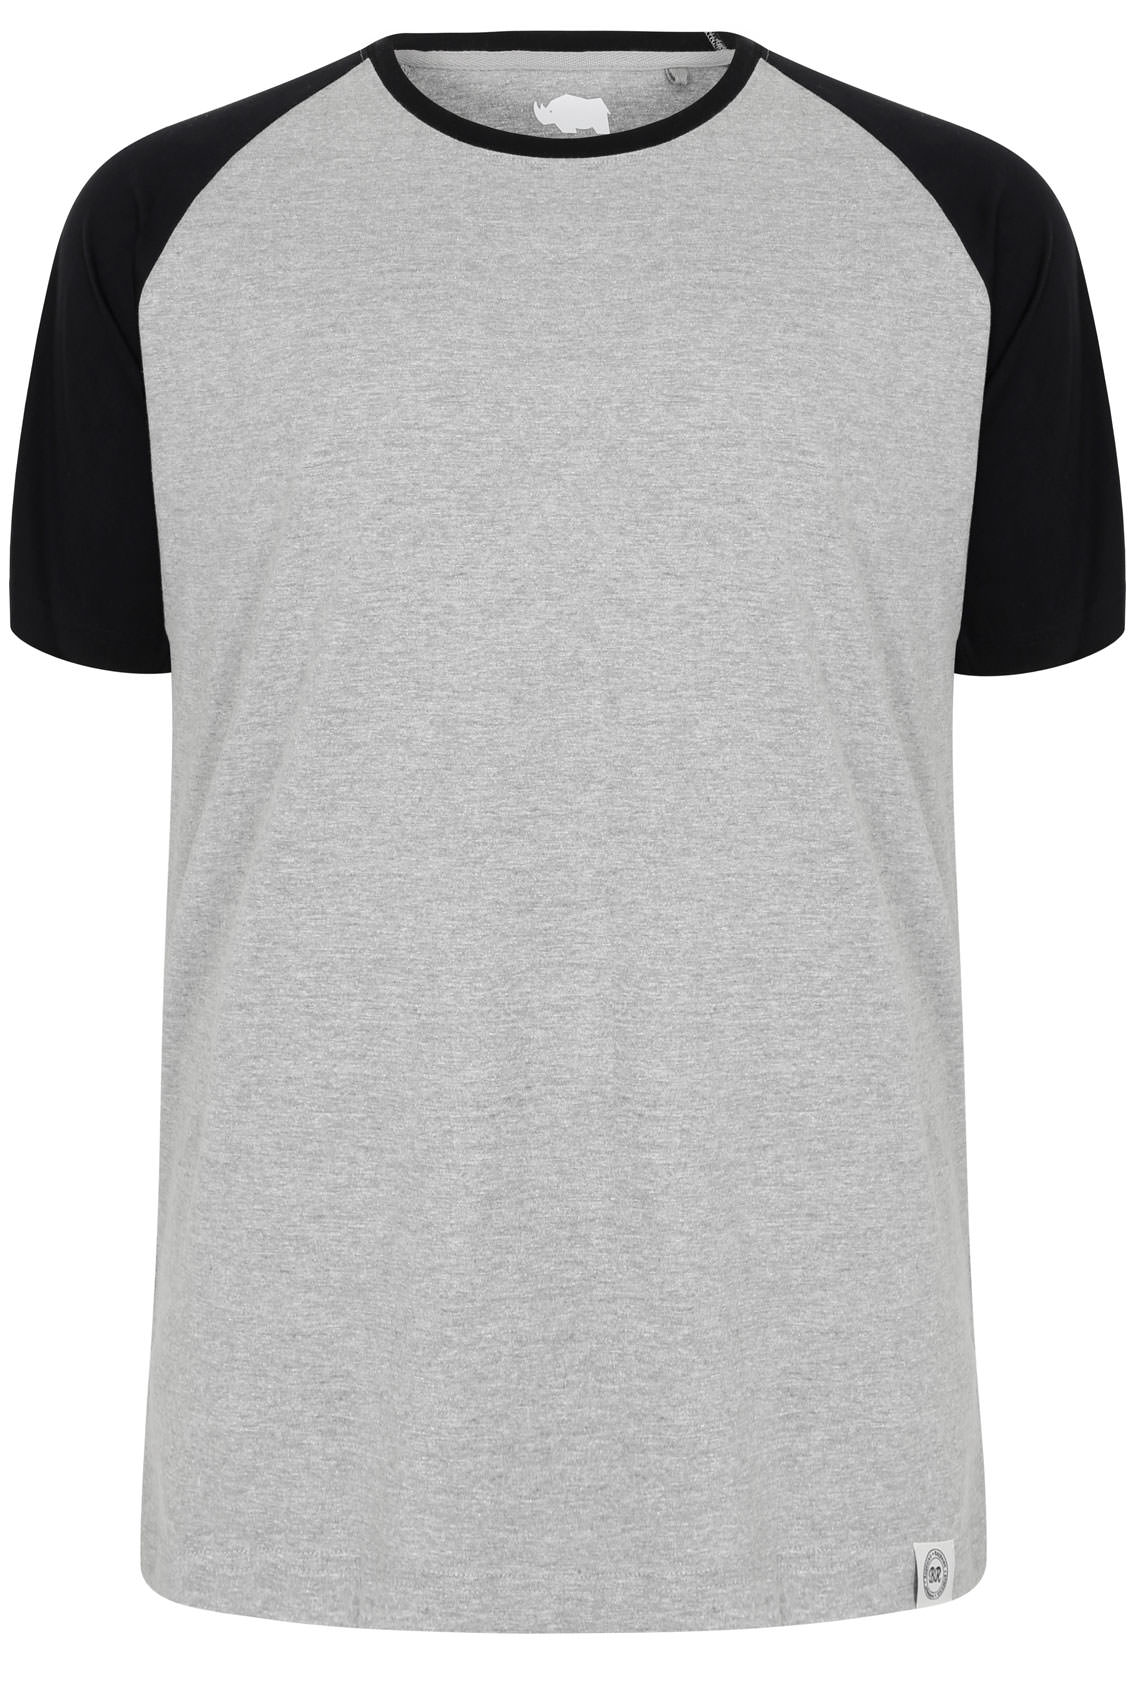 BadRhino Grey & Black Raglan T-Shirt With Short Sleeves, Size L to 8XL